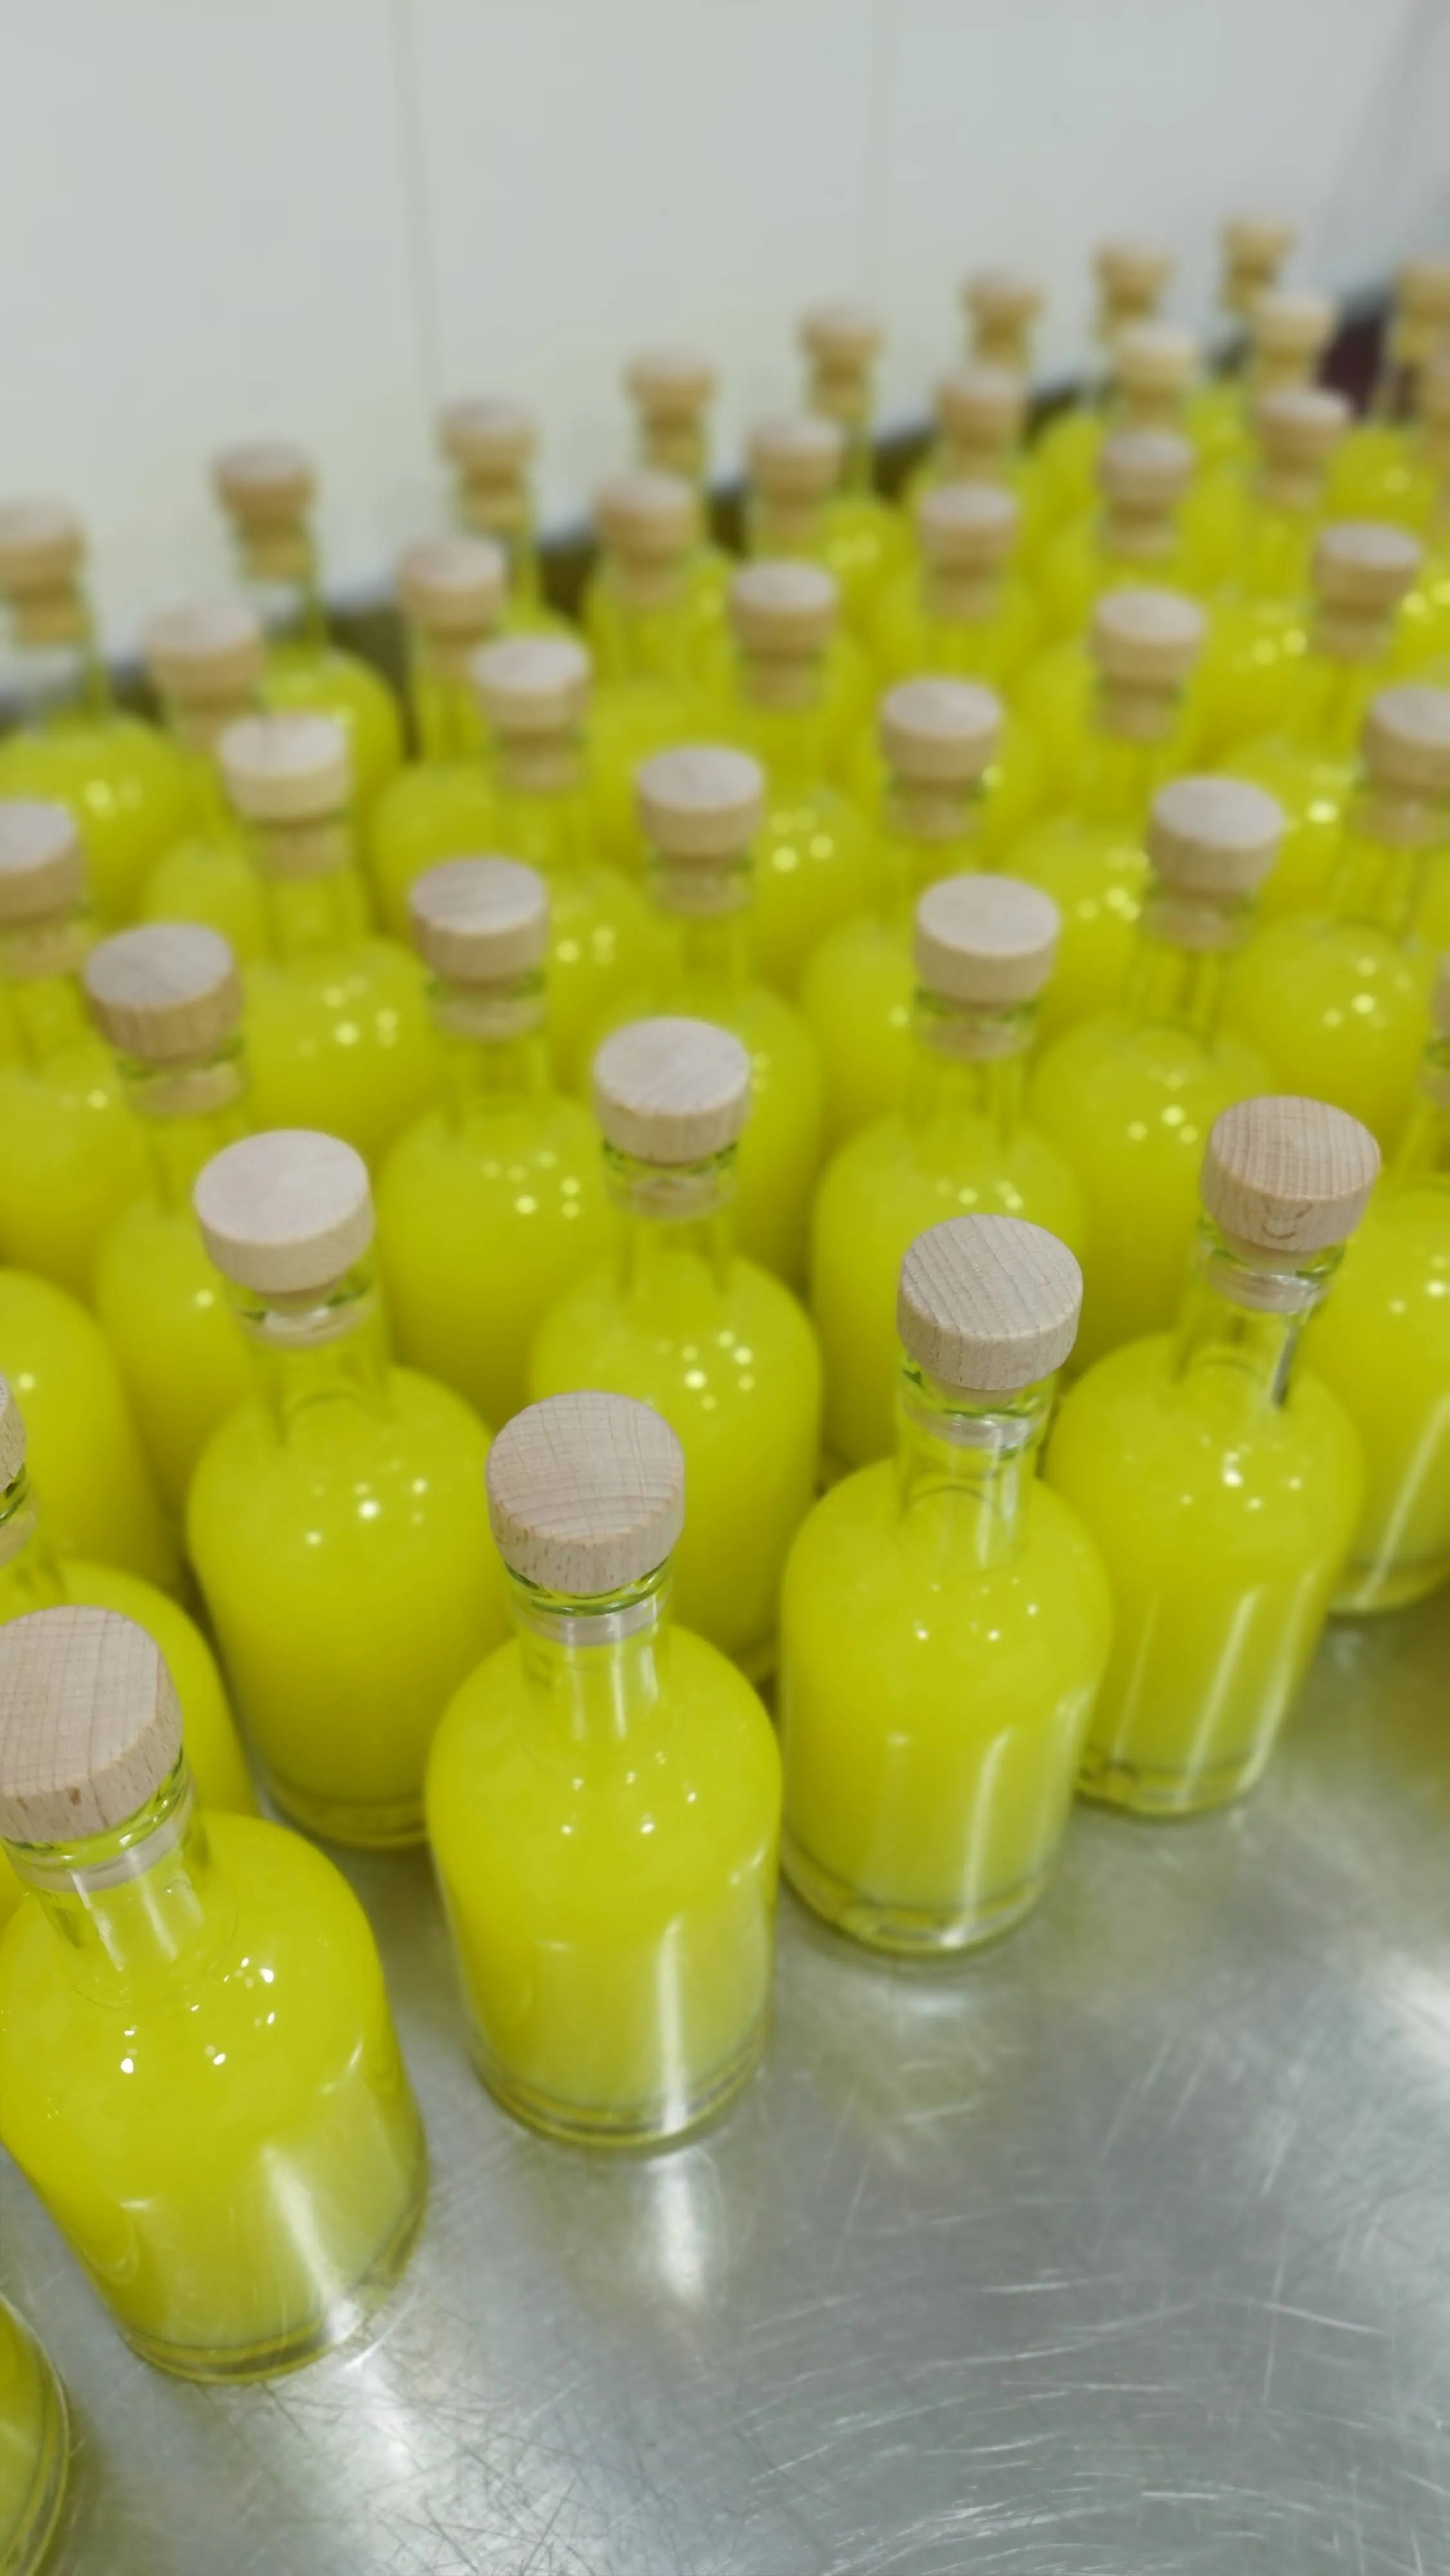 botellas limoncello artesanal produccion natural preparacion olivier